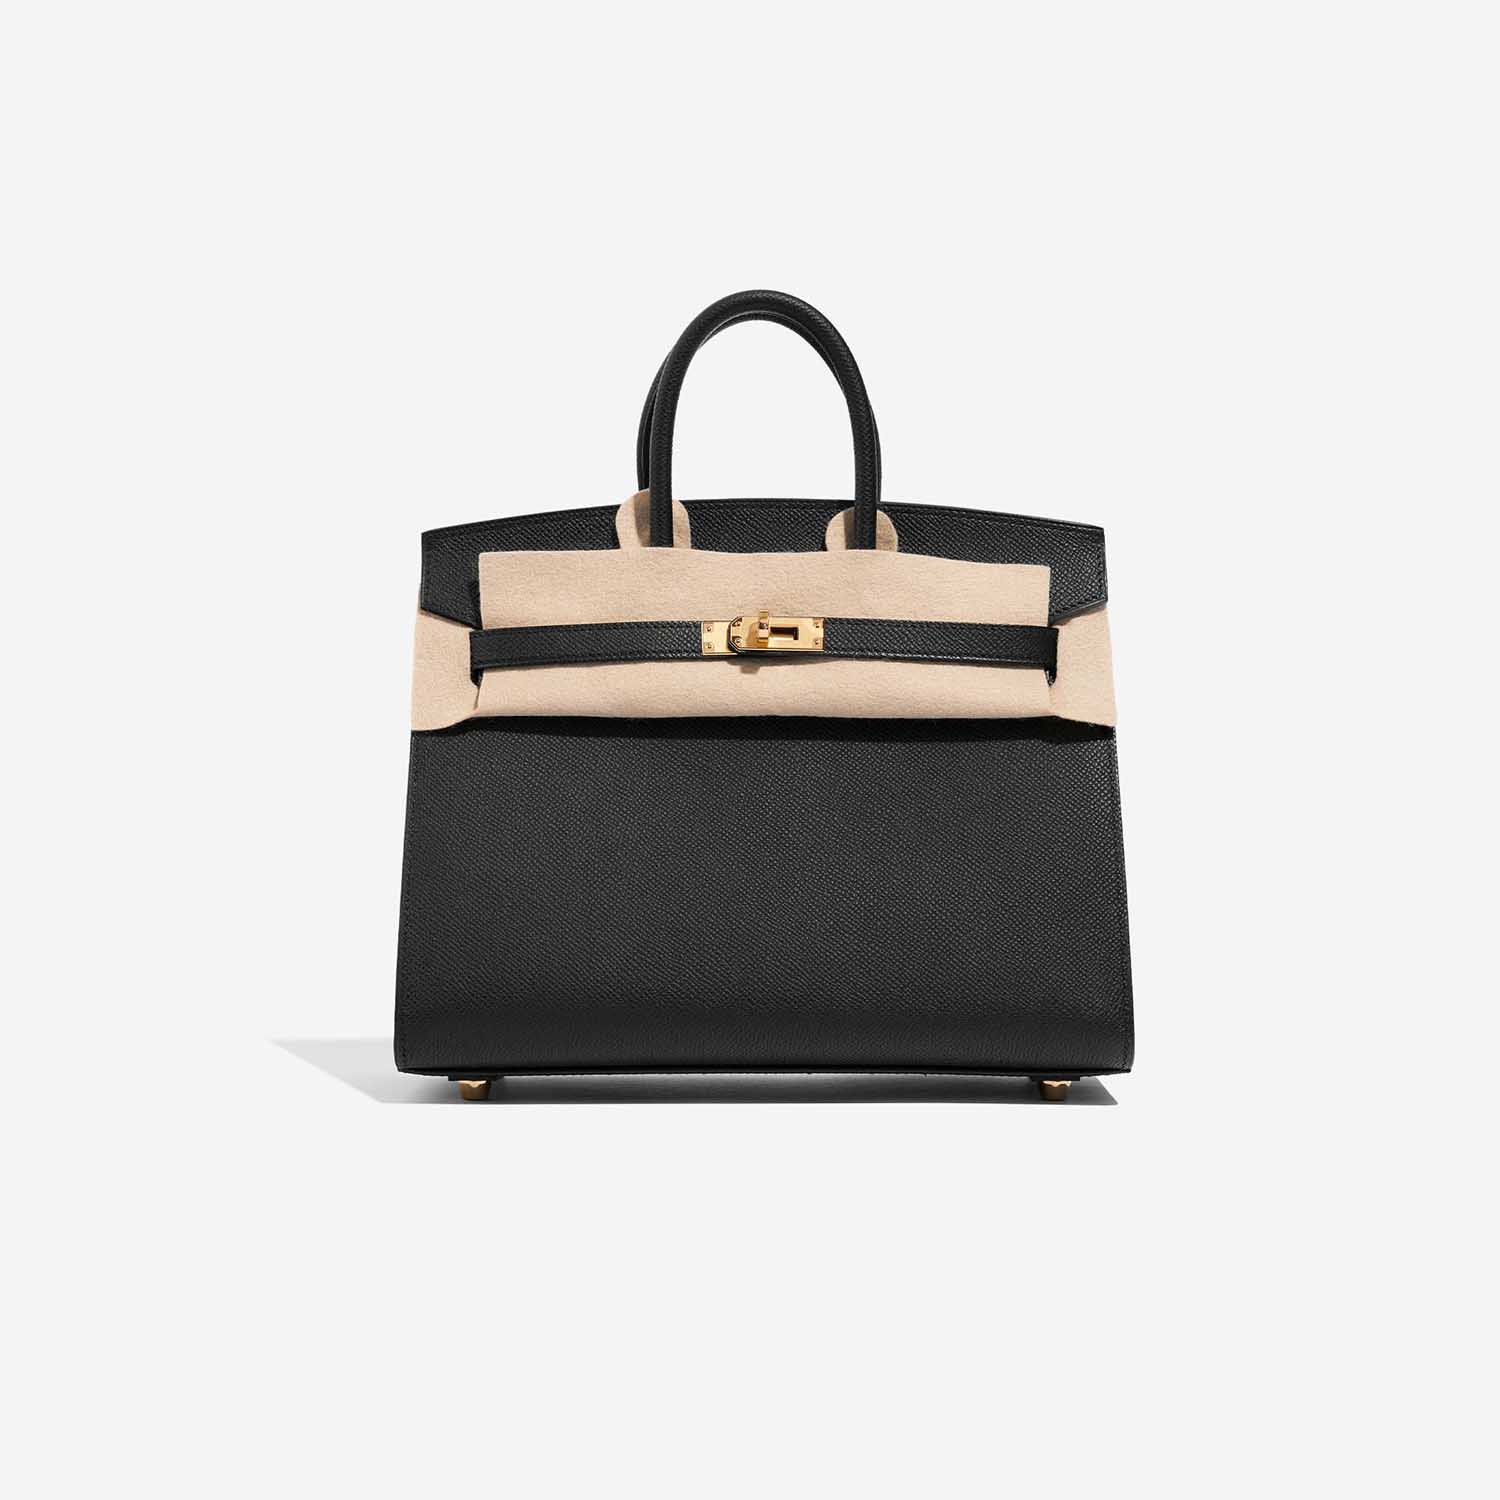 Hermès Birkin 25 cm Handbag in Black and Craie Epsom Leather